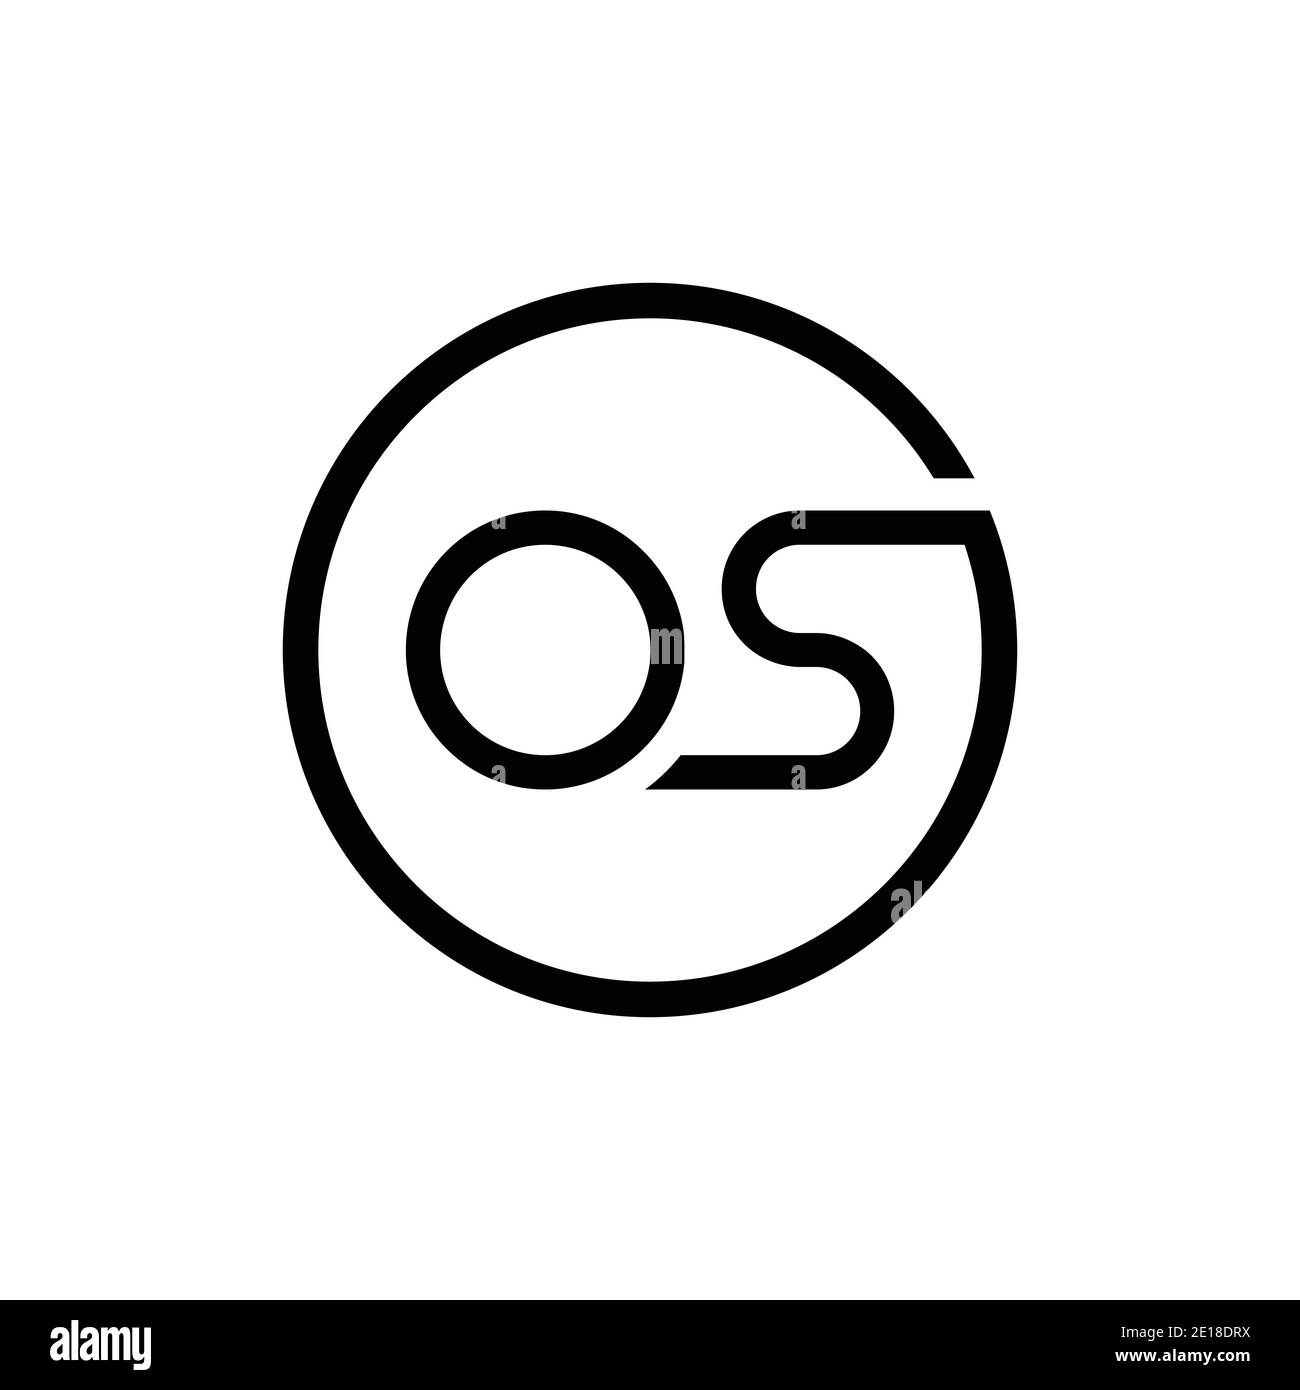 Initial Circle Letter OS Logo Design Vector Template. Abstract Minimal OS Letter Logo Design Stock Vector